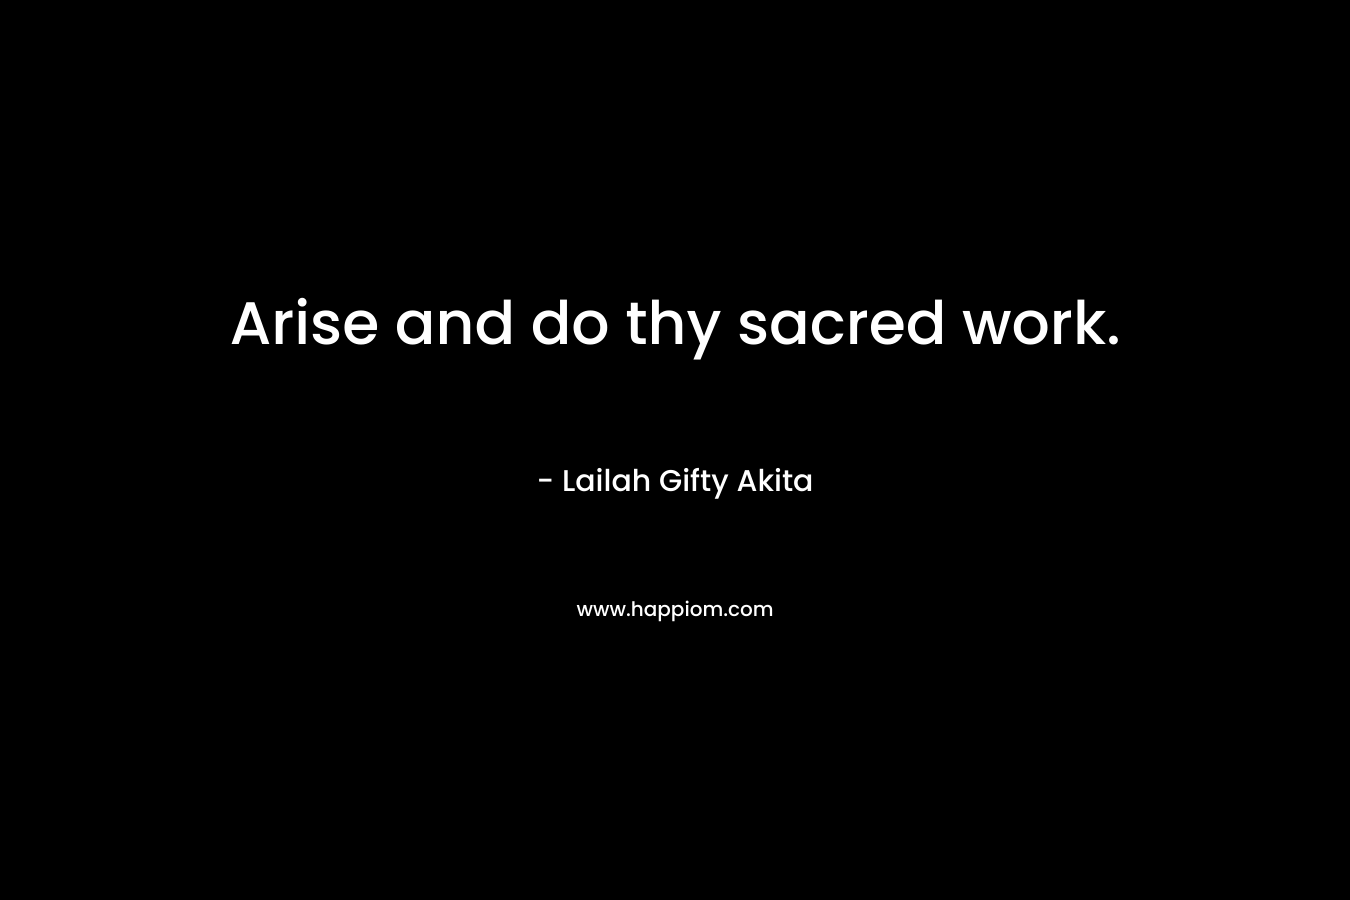 Arise and do thy sacred work.